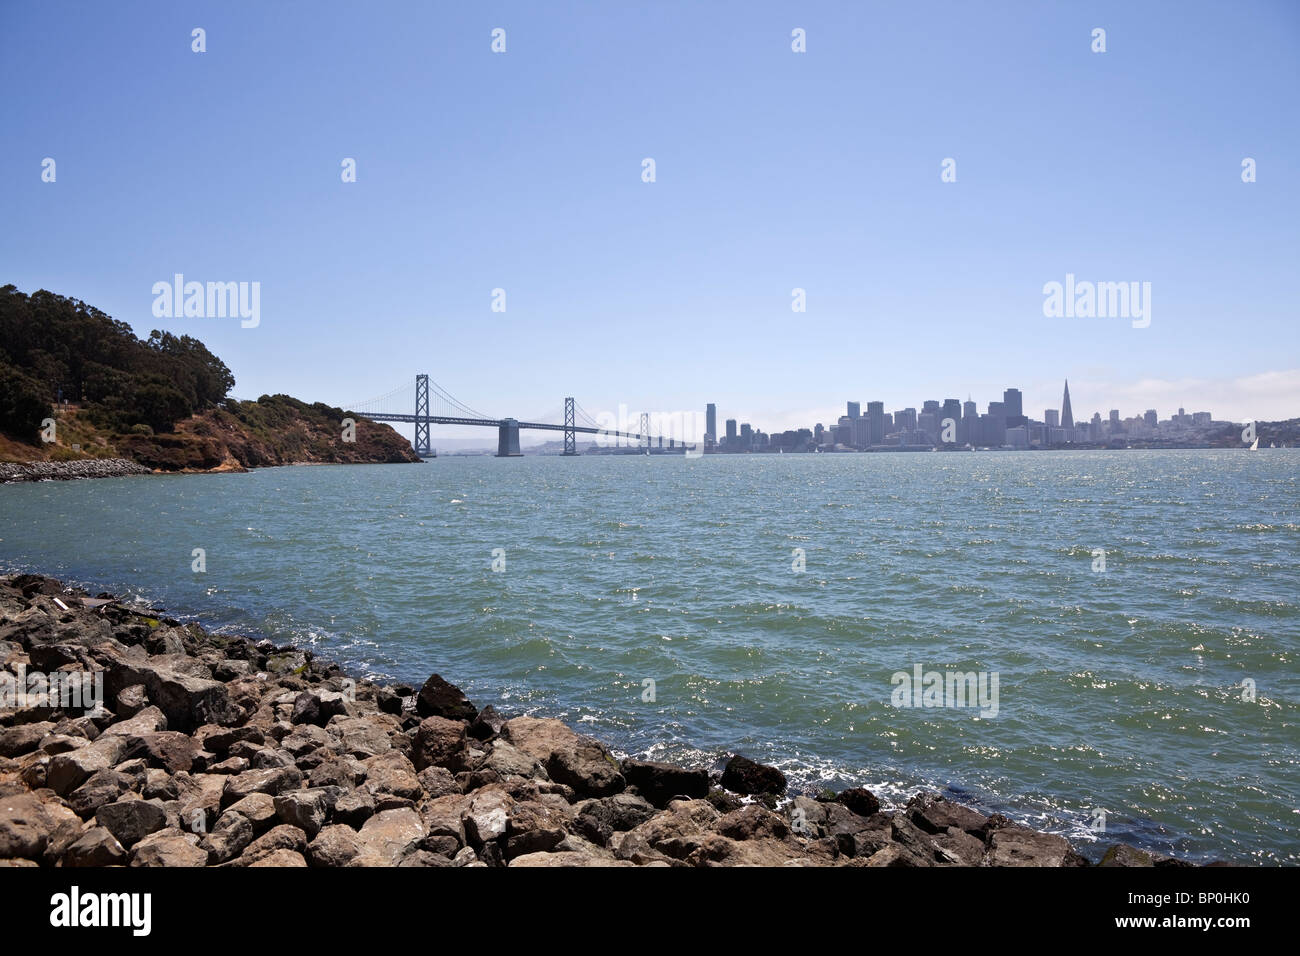 San Francisco and the Bay Bridge viewed from Treasure Island. Stock Photo